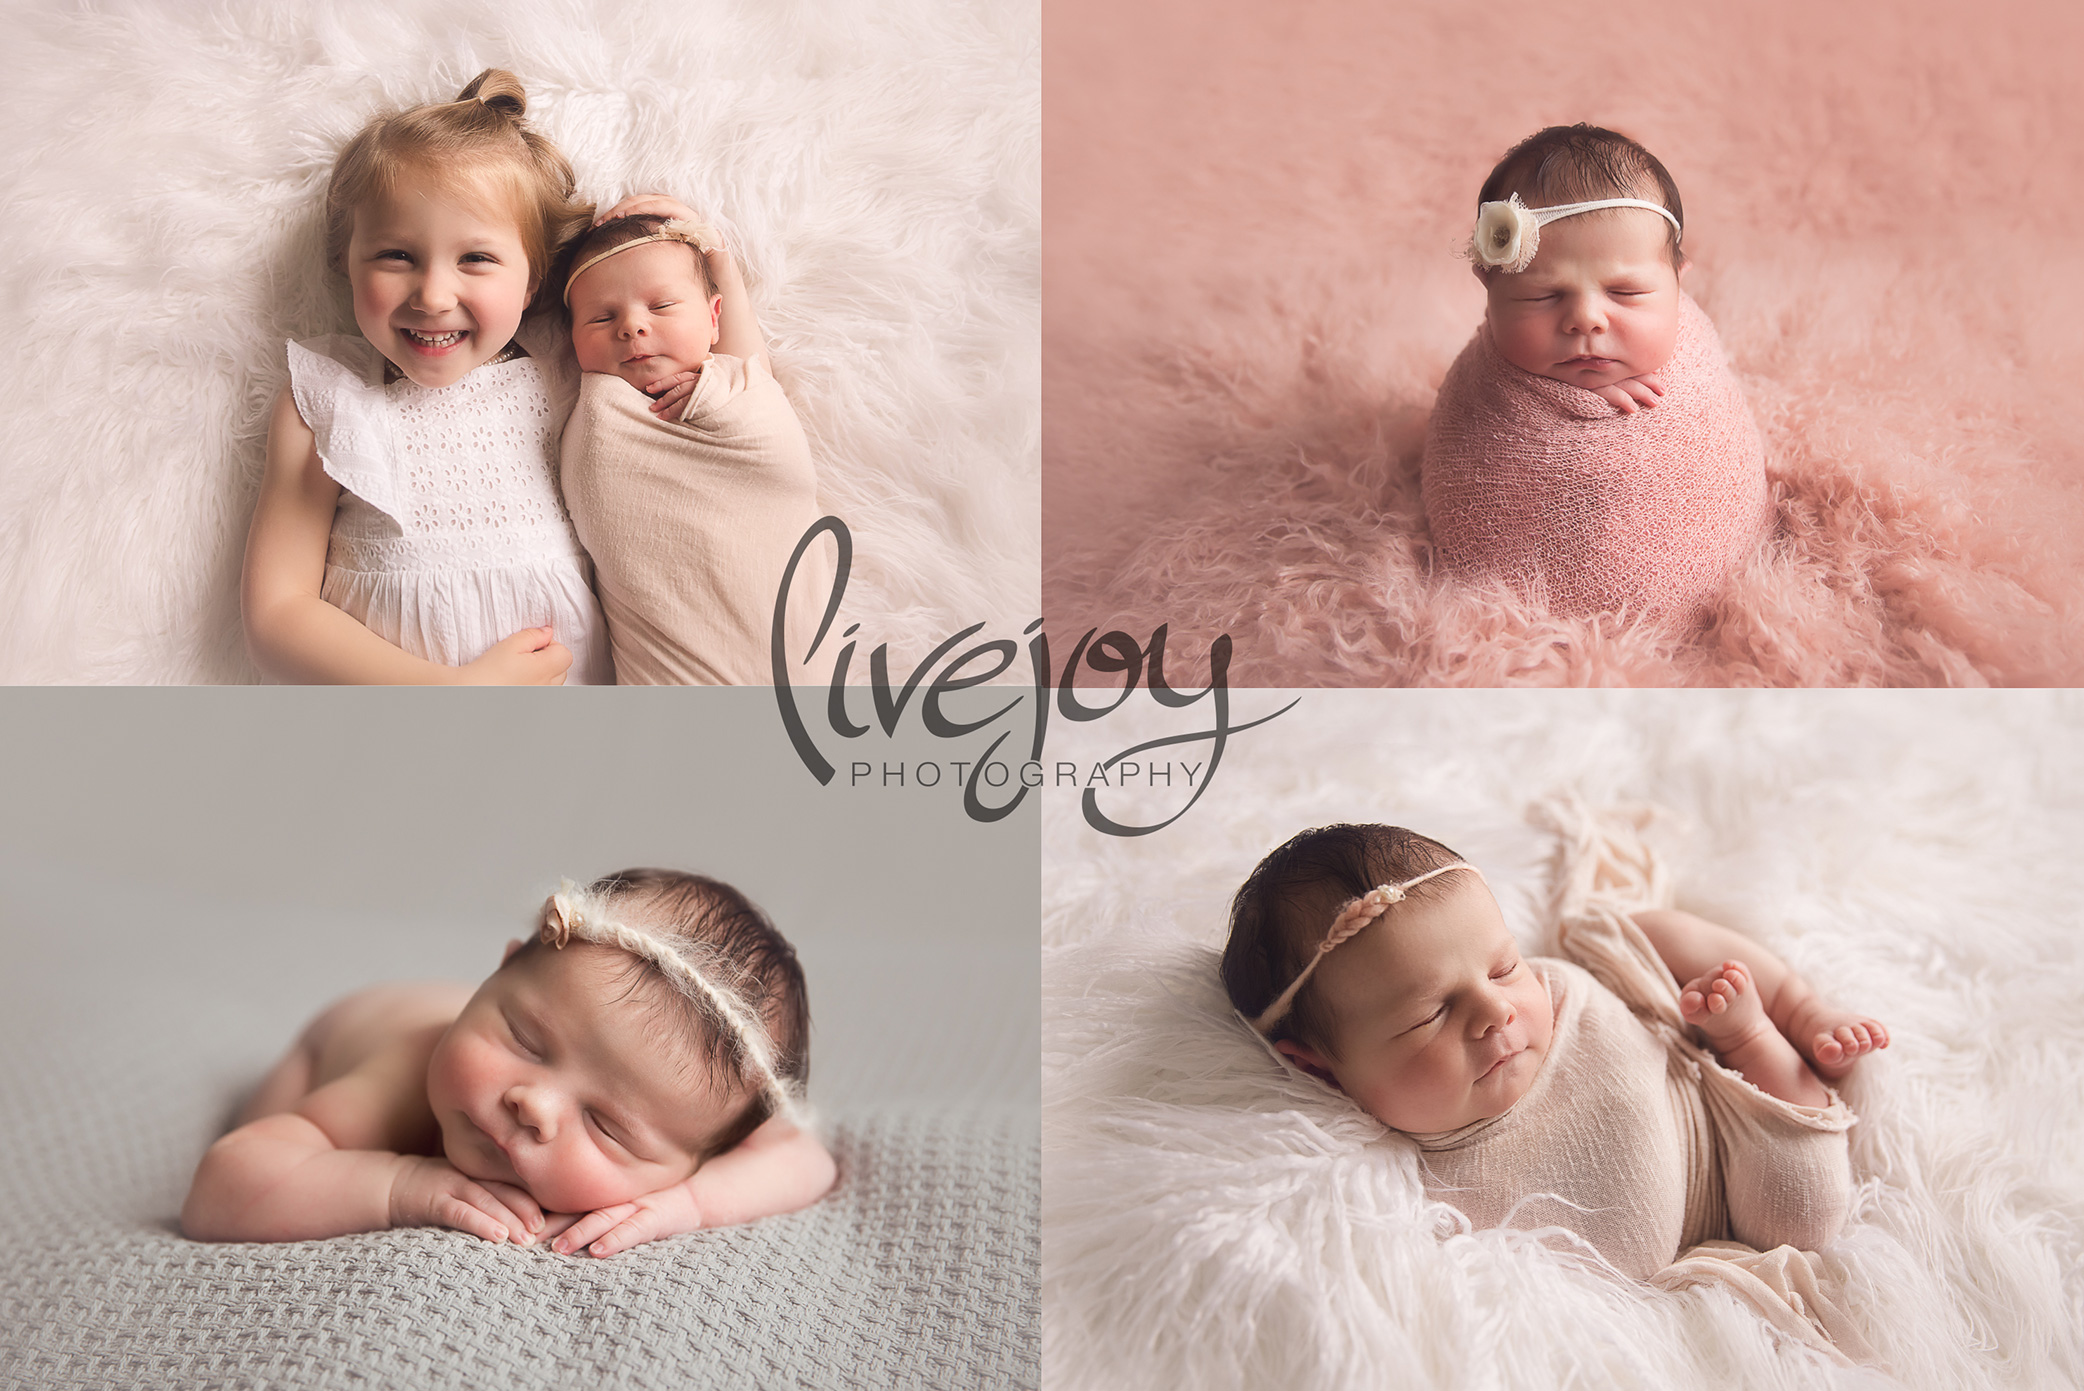 Baby Girl | Newborn Photography | Oregon | LiveJoy Photography